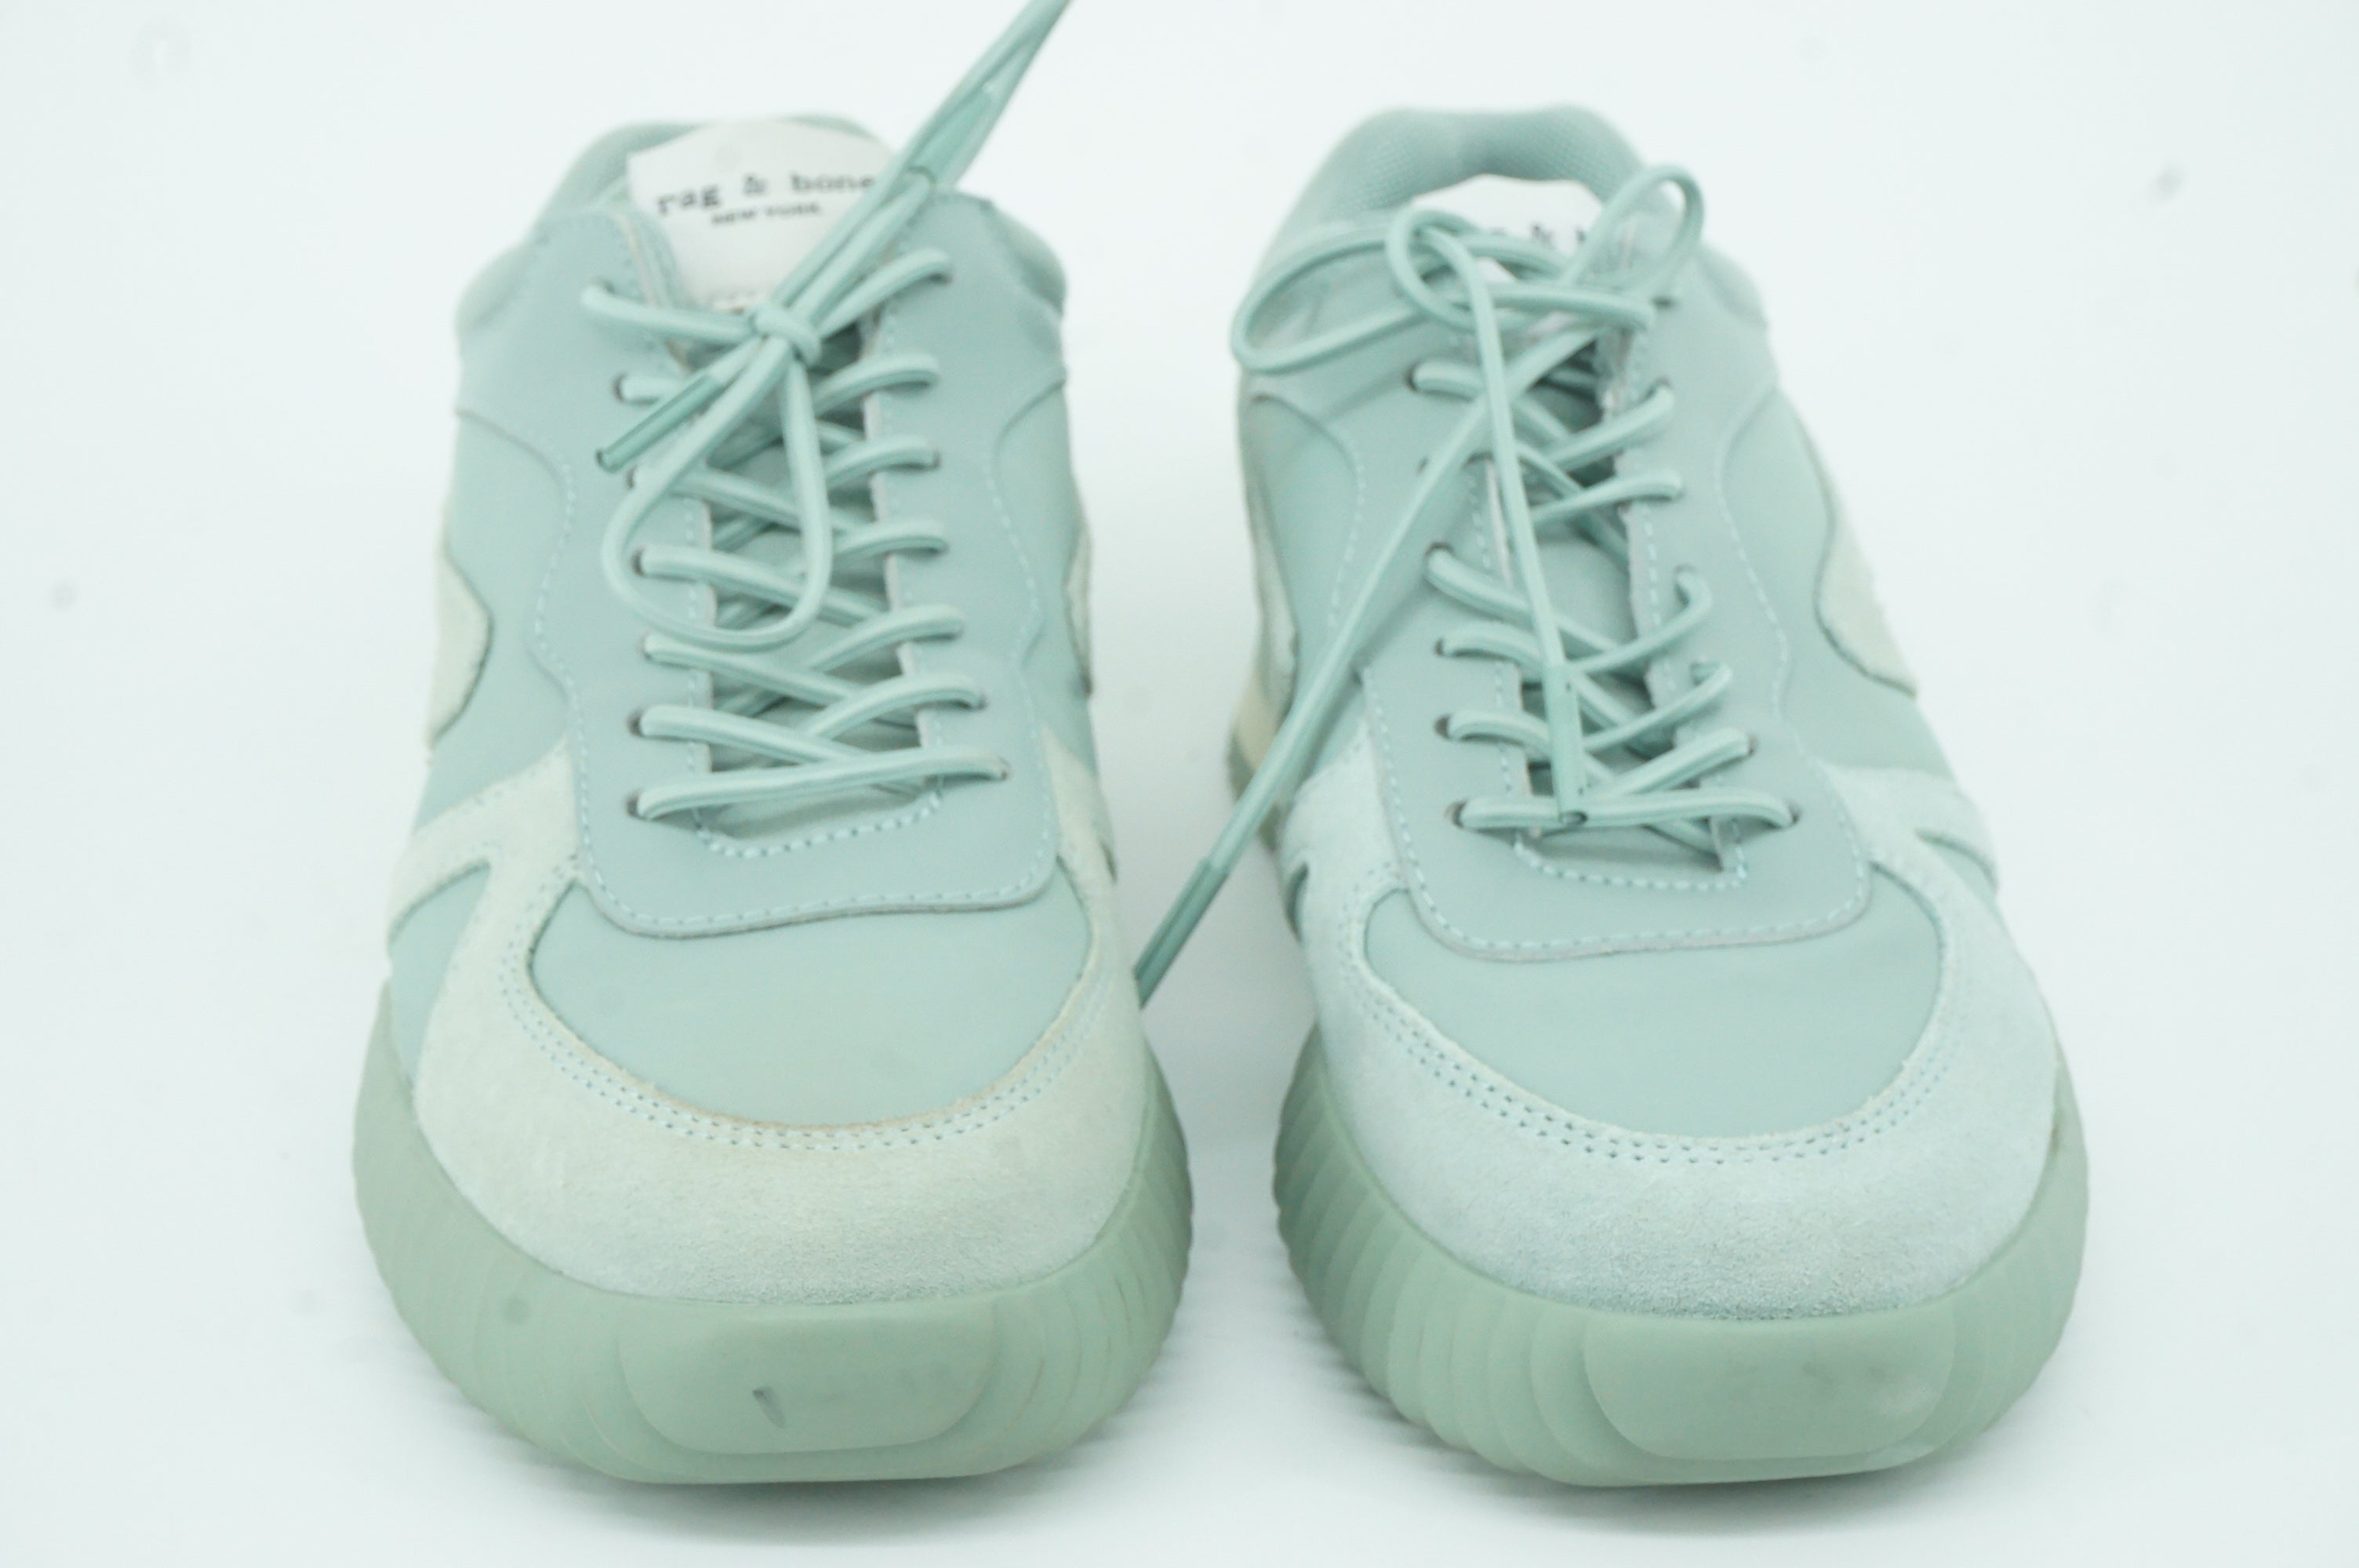 Rag & Bone Retro 2.0 Runner Green Sneaker SZ 37 New $275 recycled materials